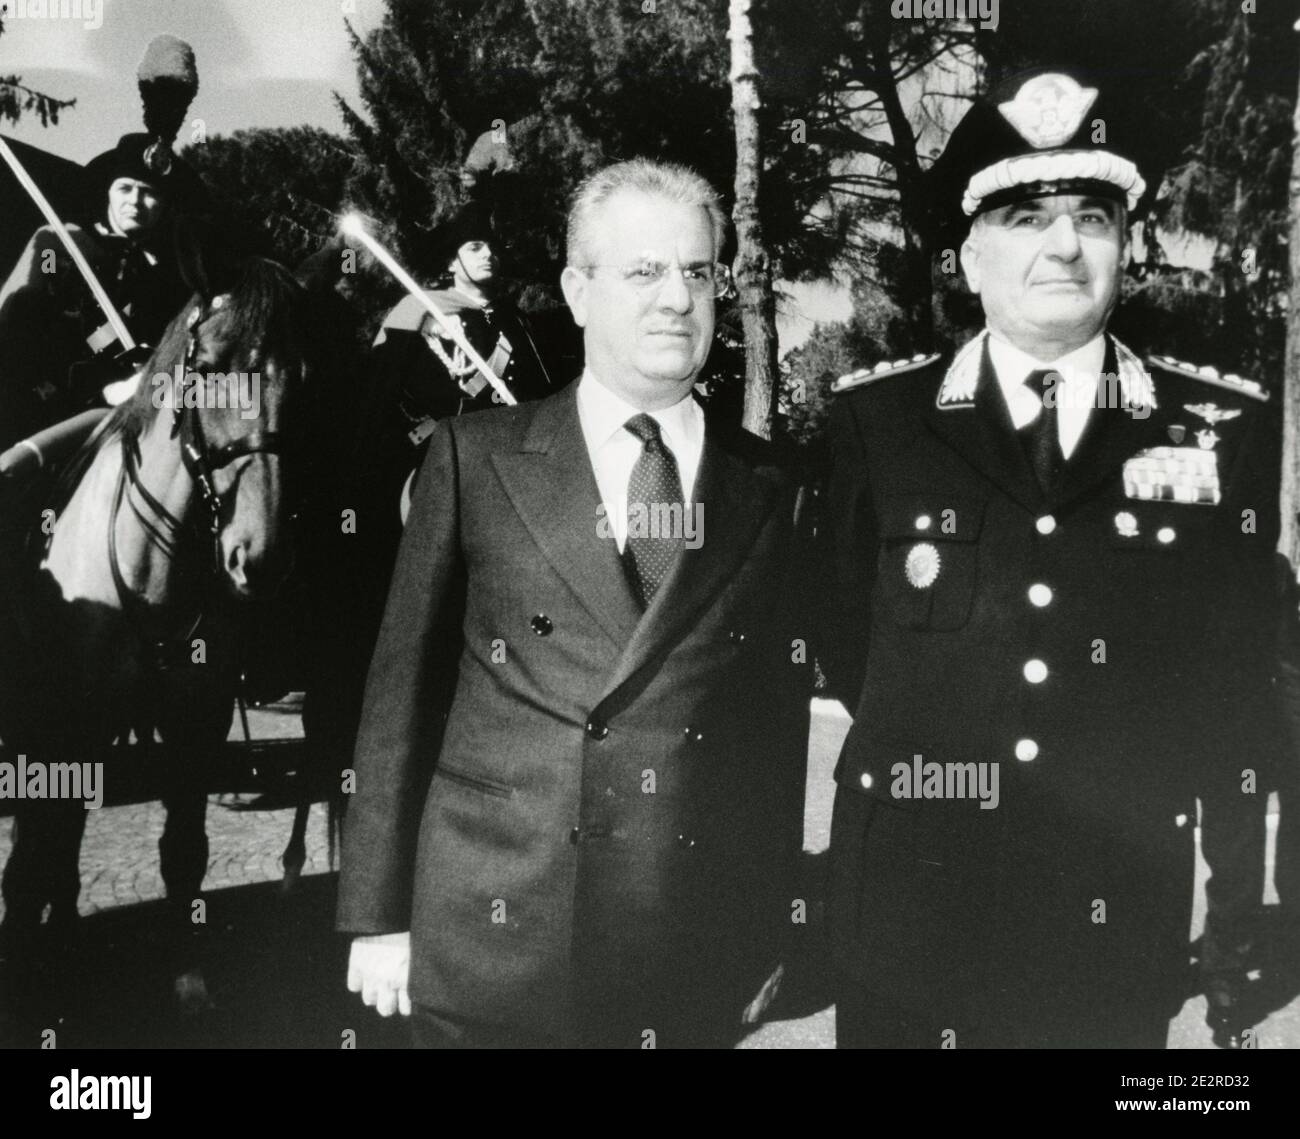 Italian Carabinieri General Sergio Siracusa and politician former minister Claudio Scajola, 2000s Stock Photo